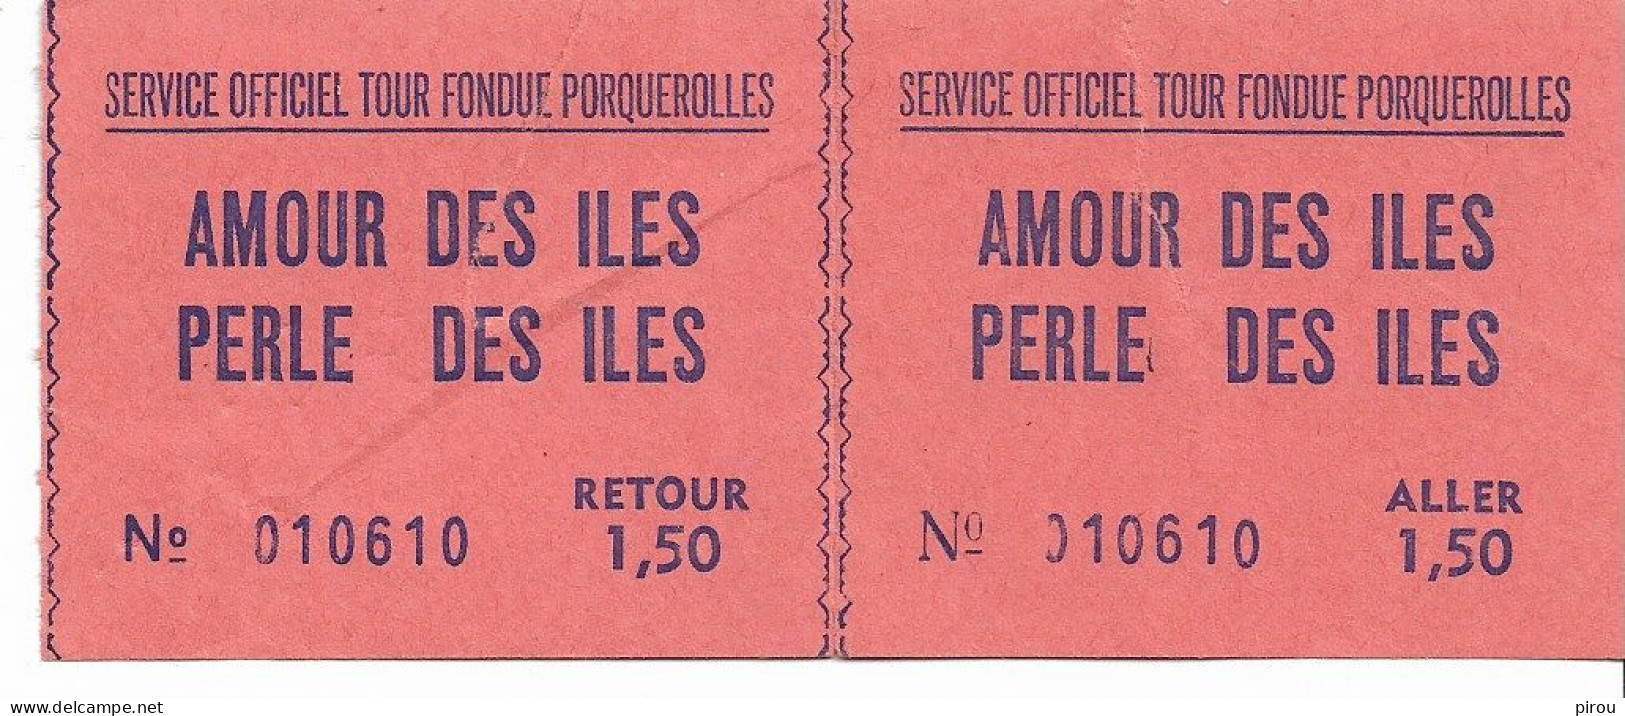 BILLETS De BATEAU POUR PORQUEROLLES 1969 - Eintrittskarten